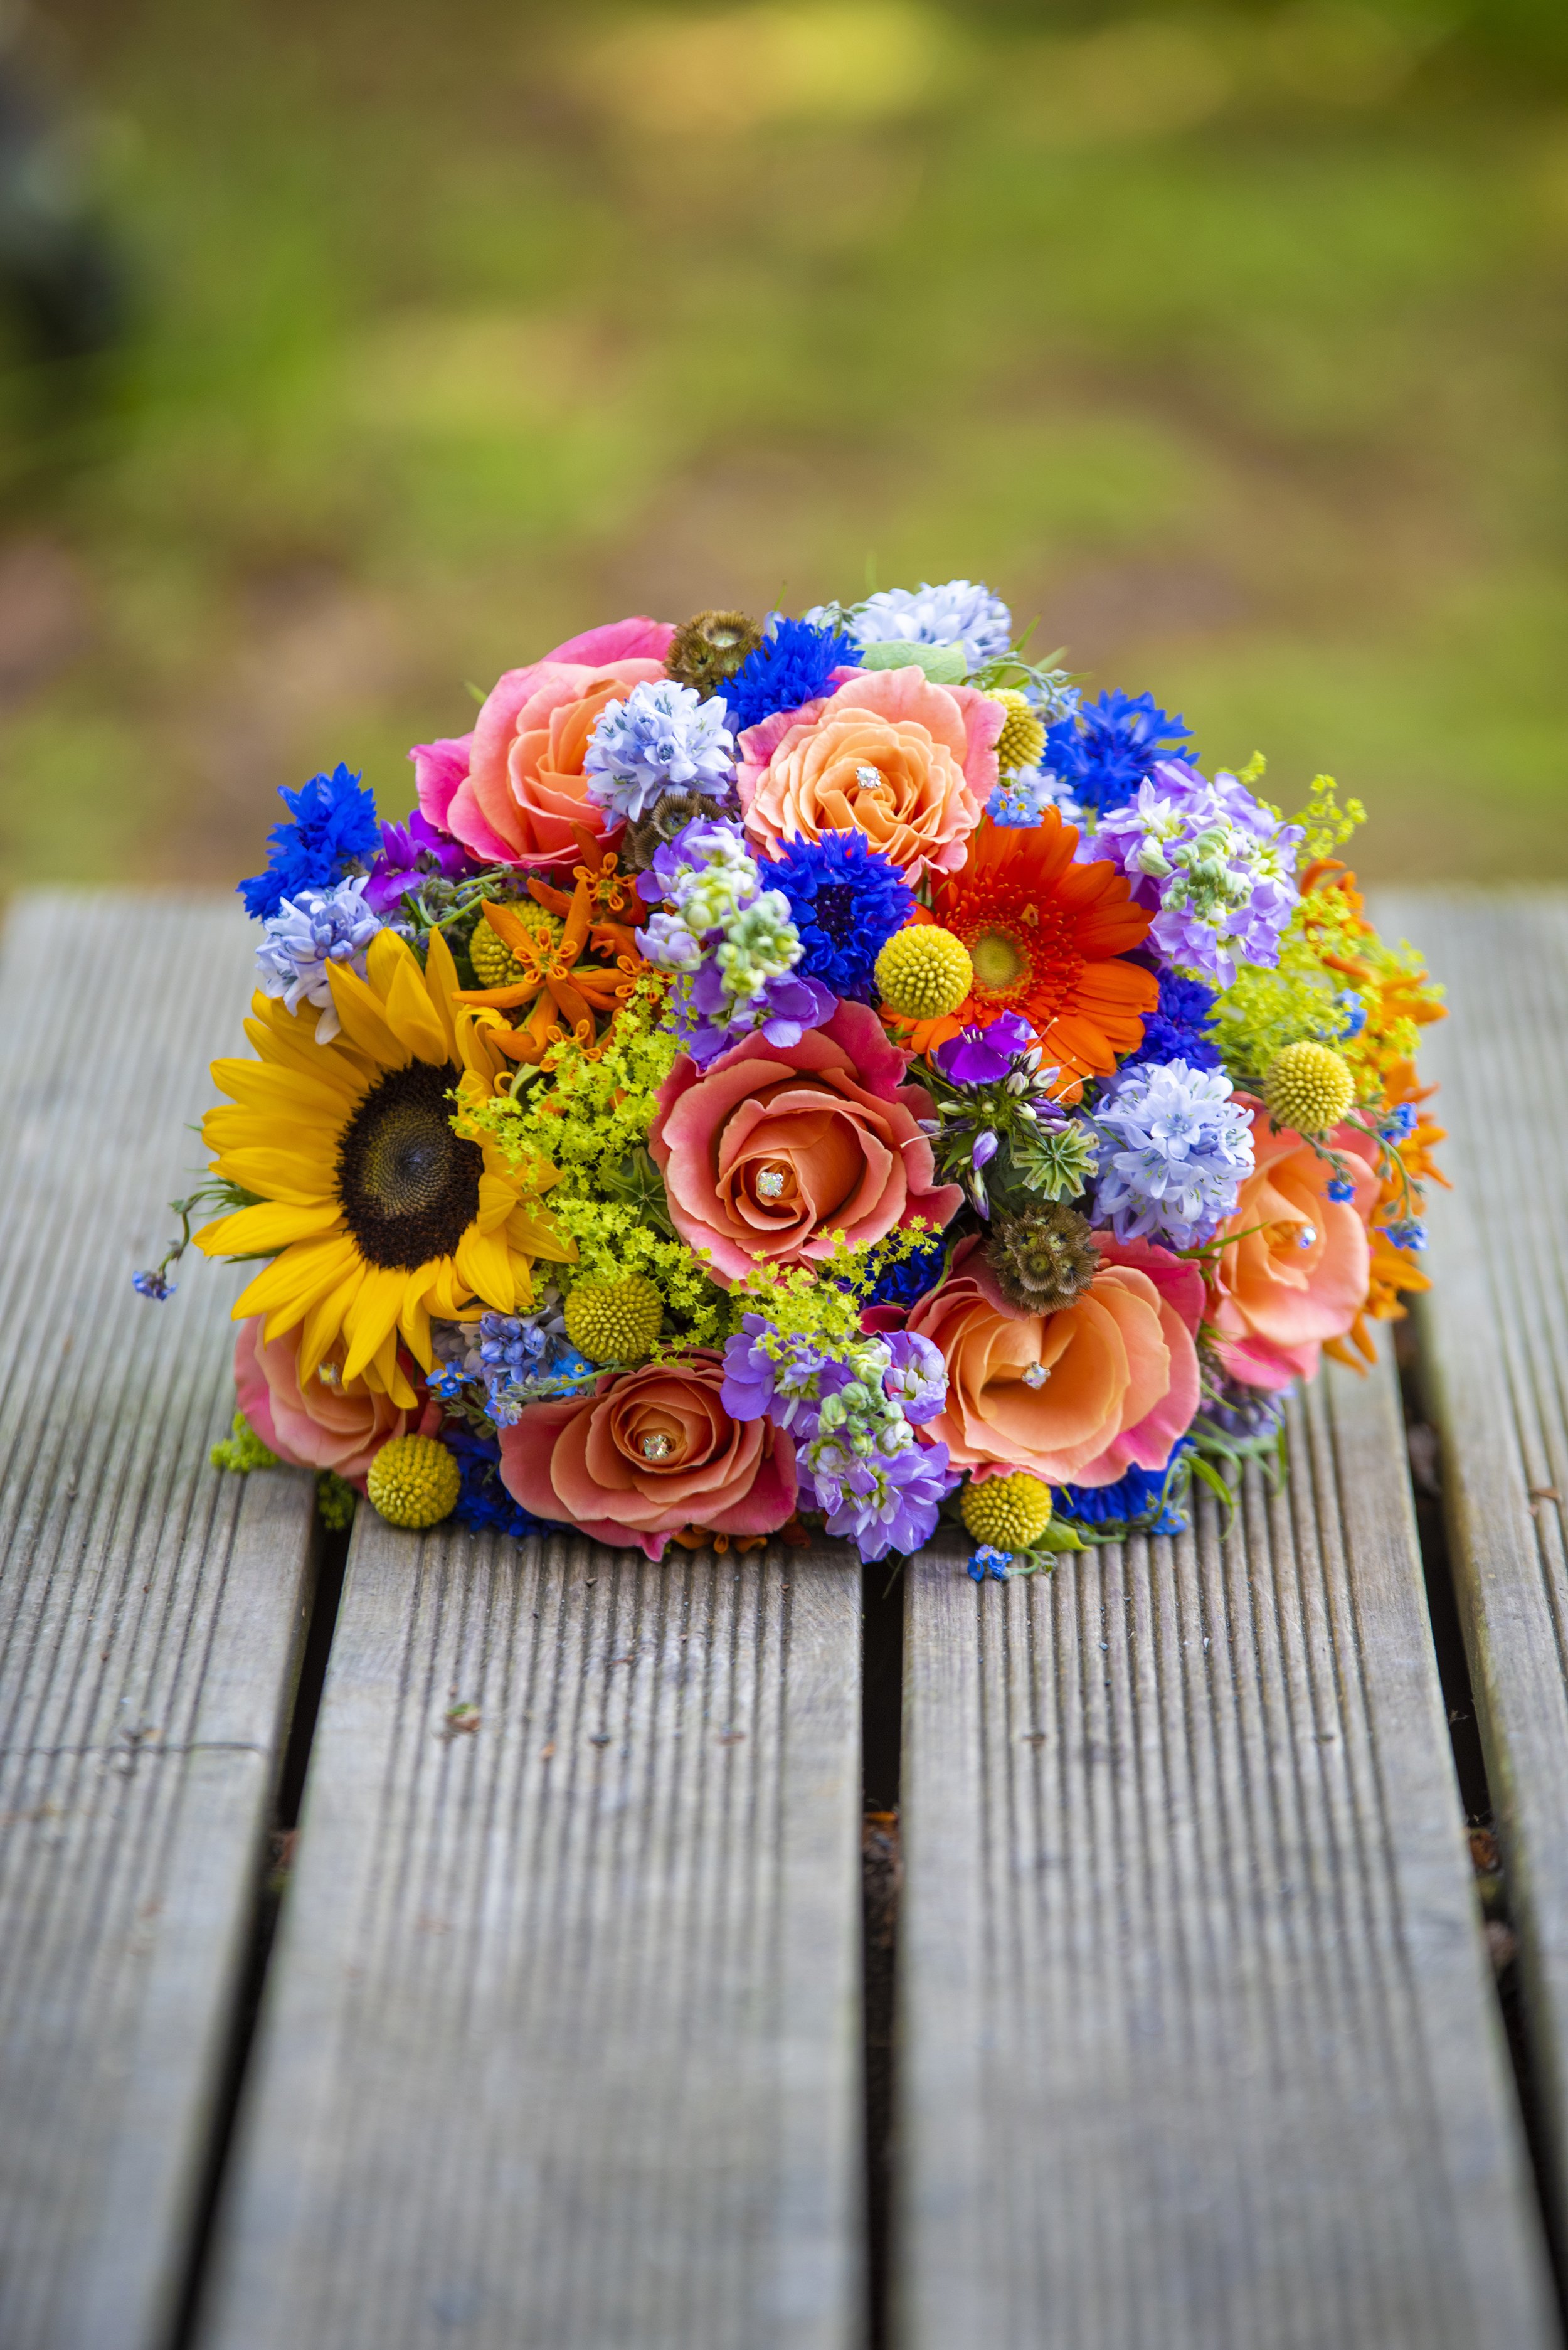 Lincolnshire-wedding-bridal-bouquet-photographs.jpg